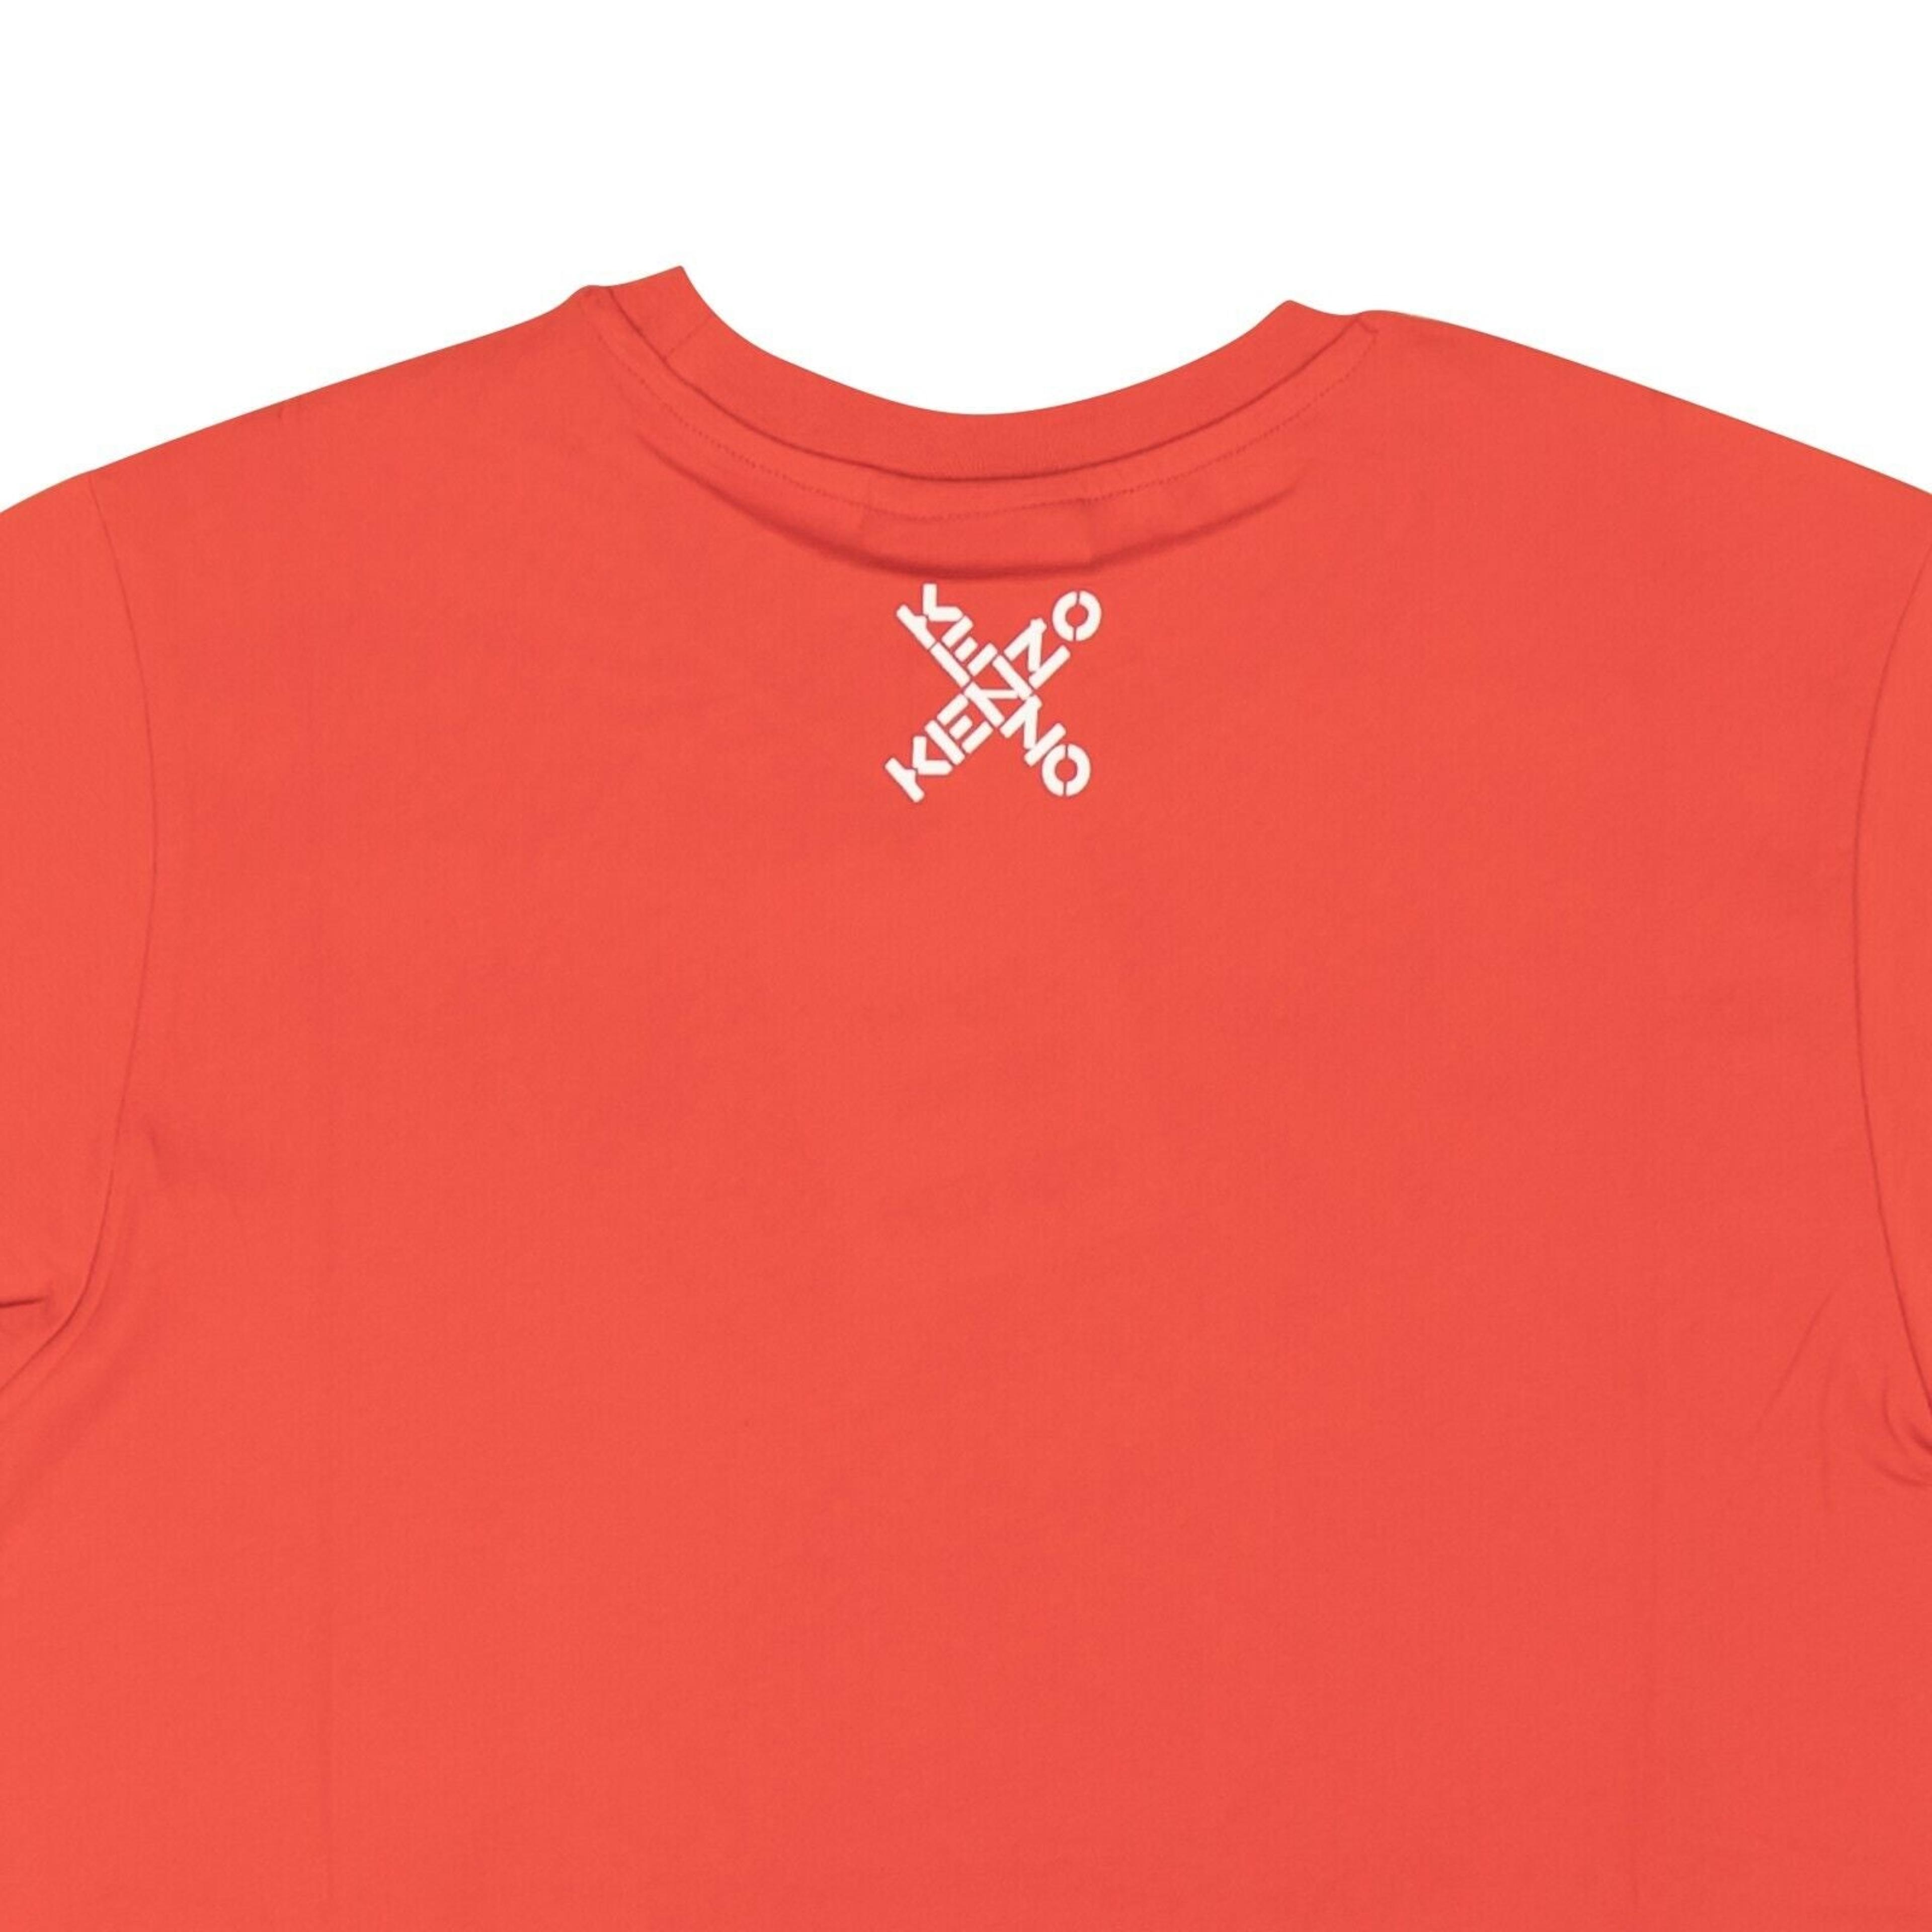 Alternate View 3 of Kenzo Big X T-Shirt - Red